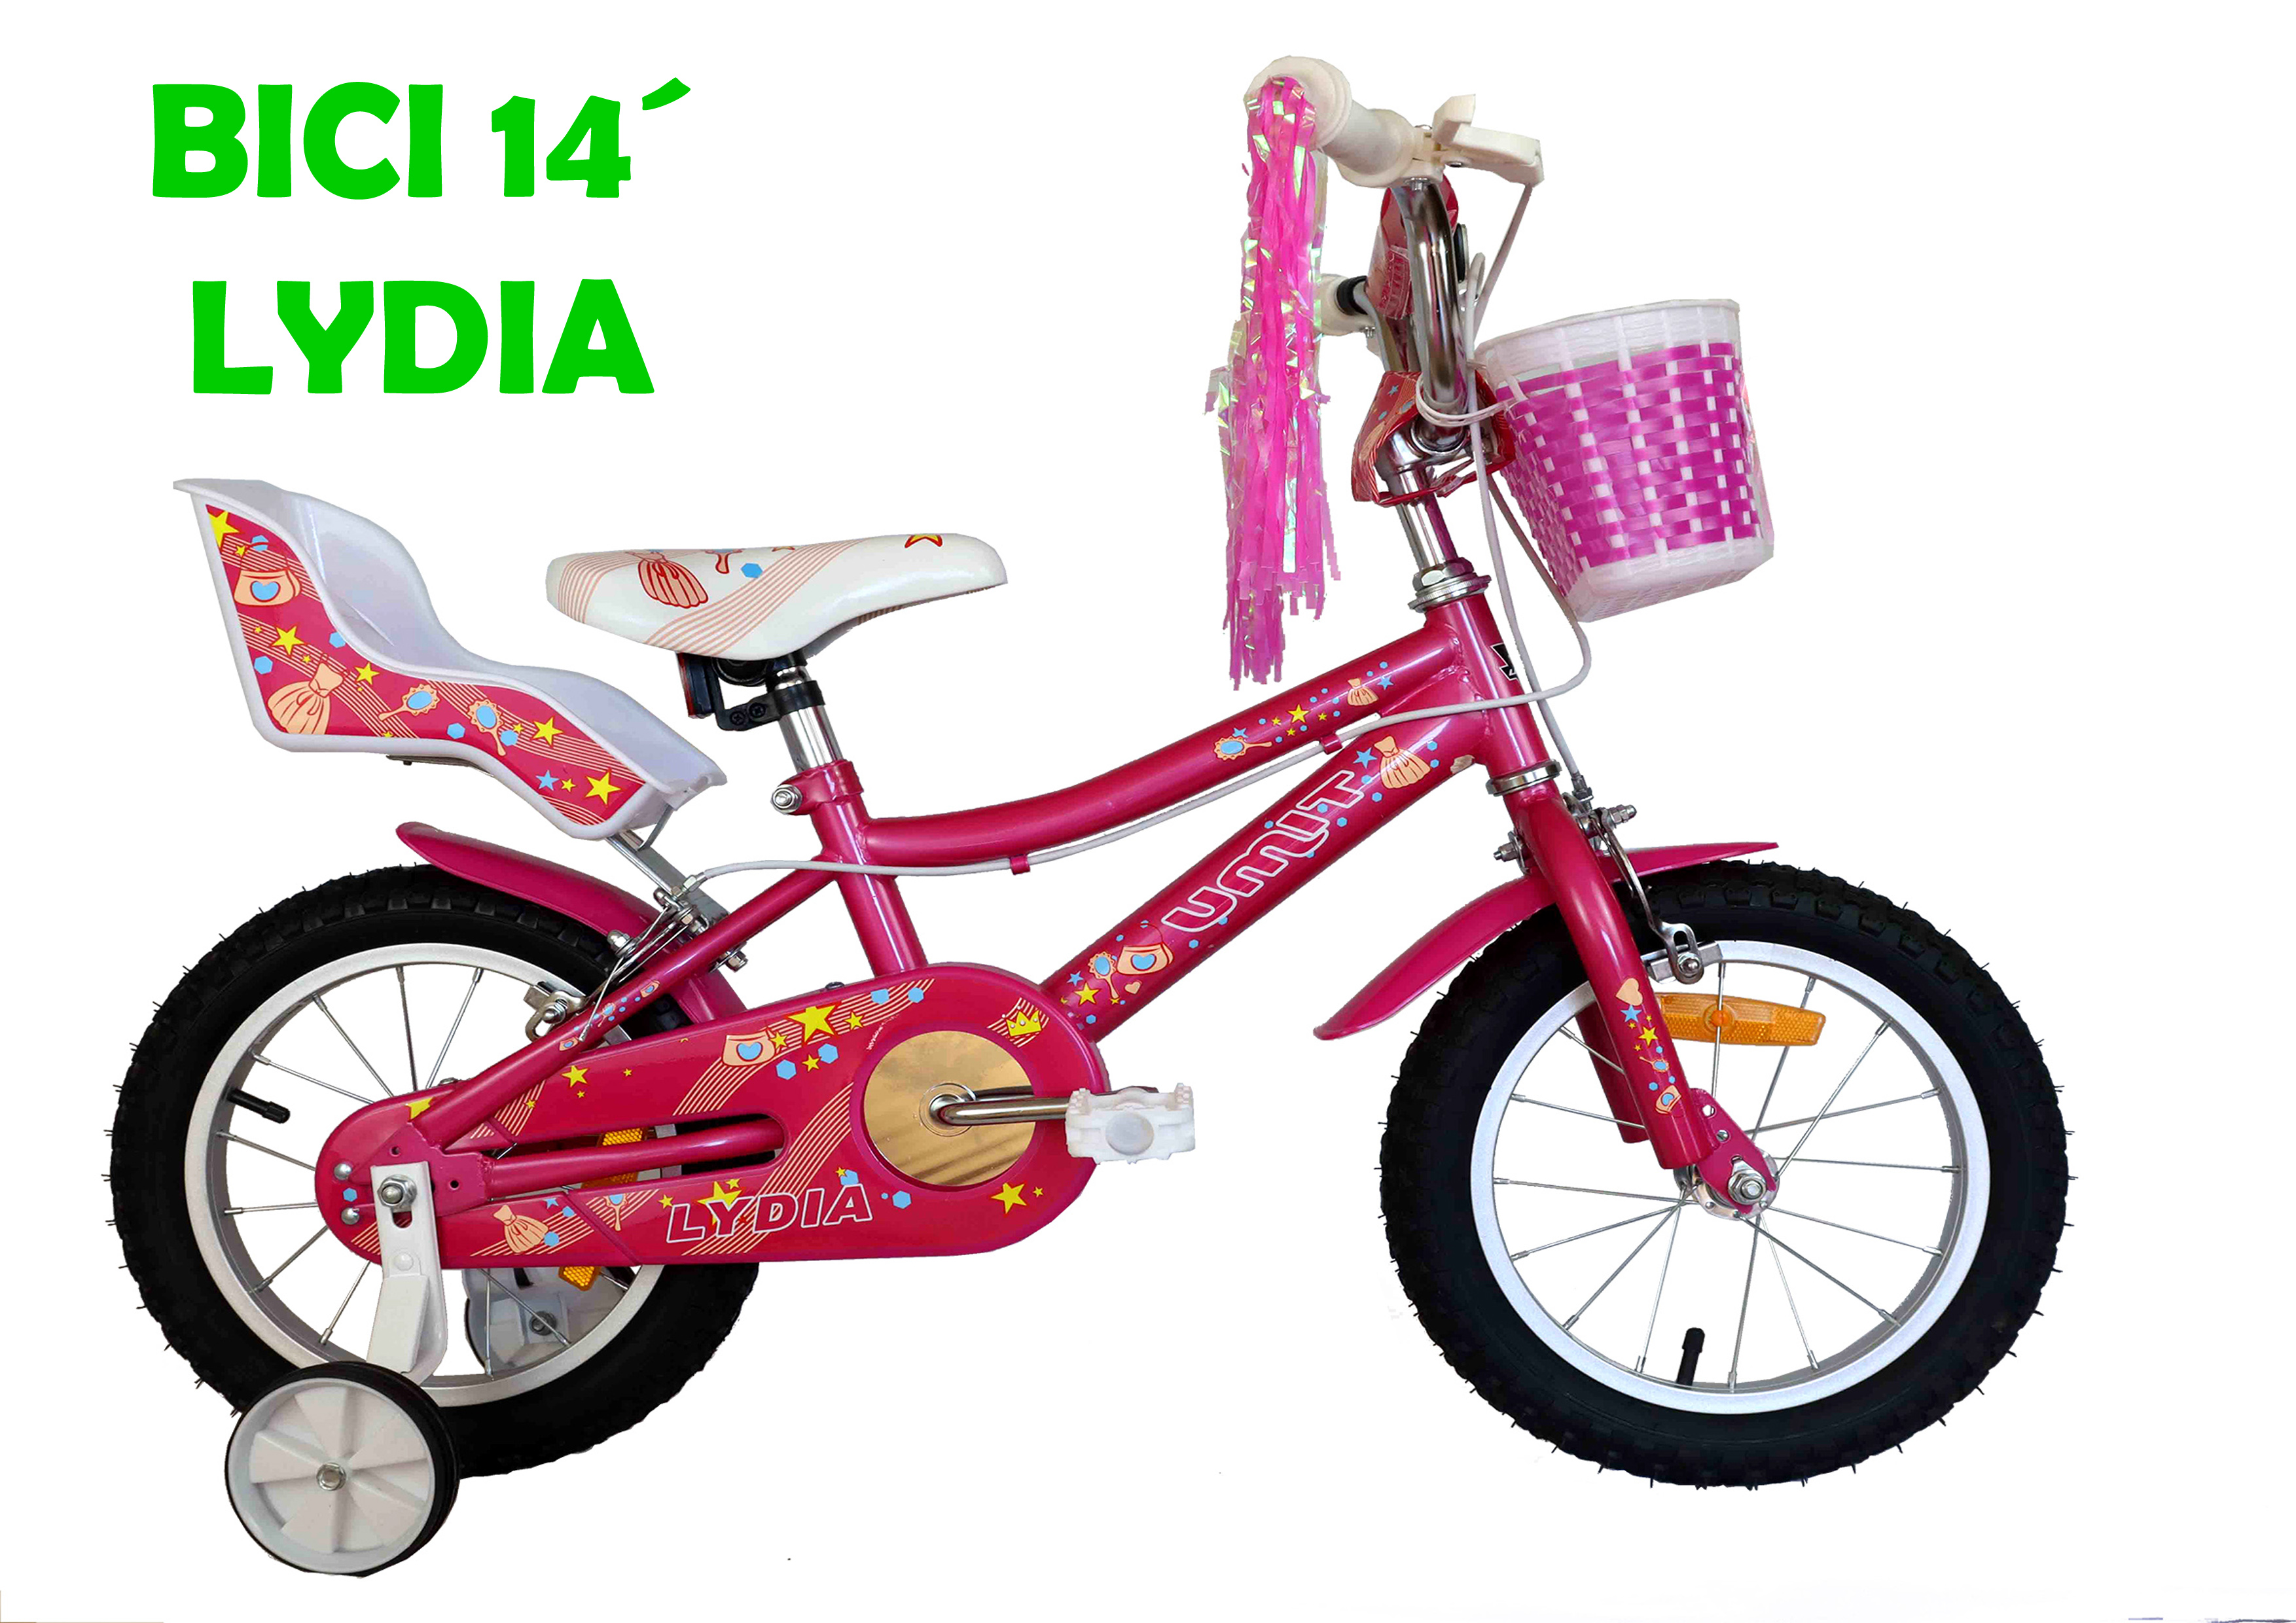 BICI 14" LYDIA J1461 - V31821